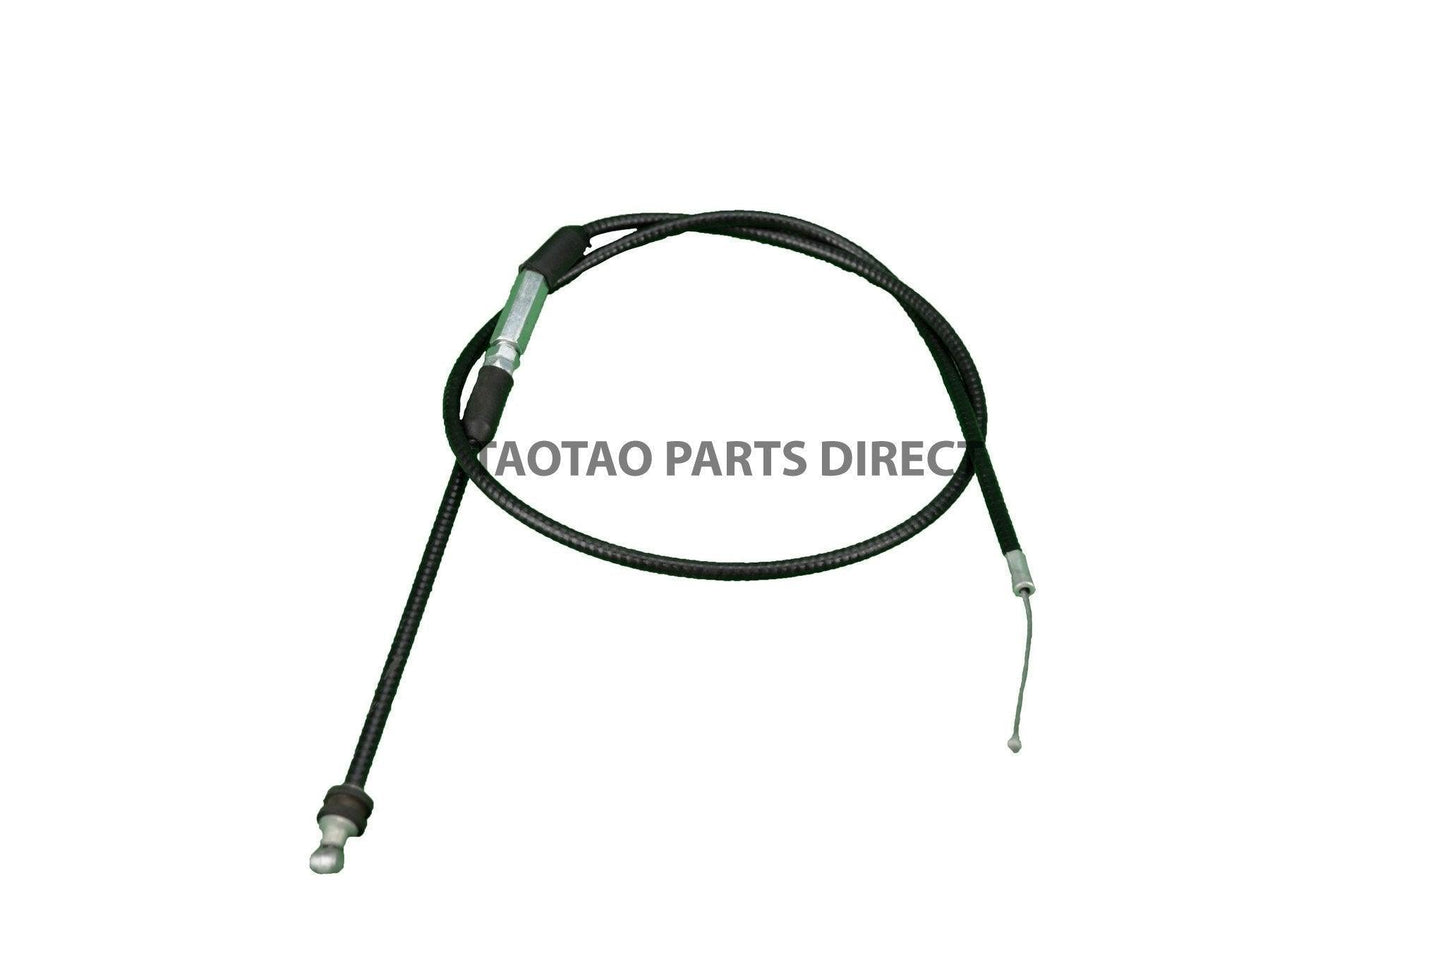 110-125cc Throttle Cable - TaoTaoPartsDirect.com